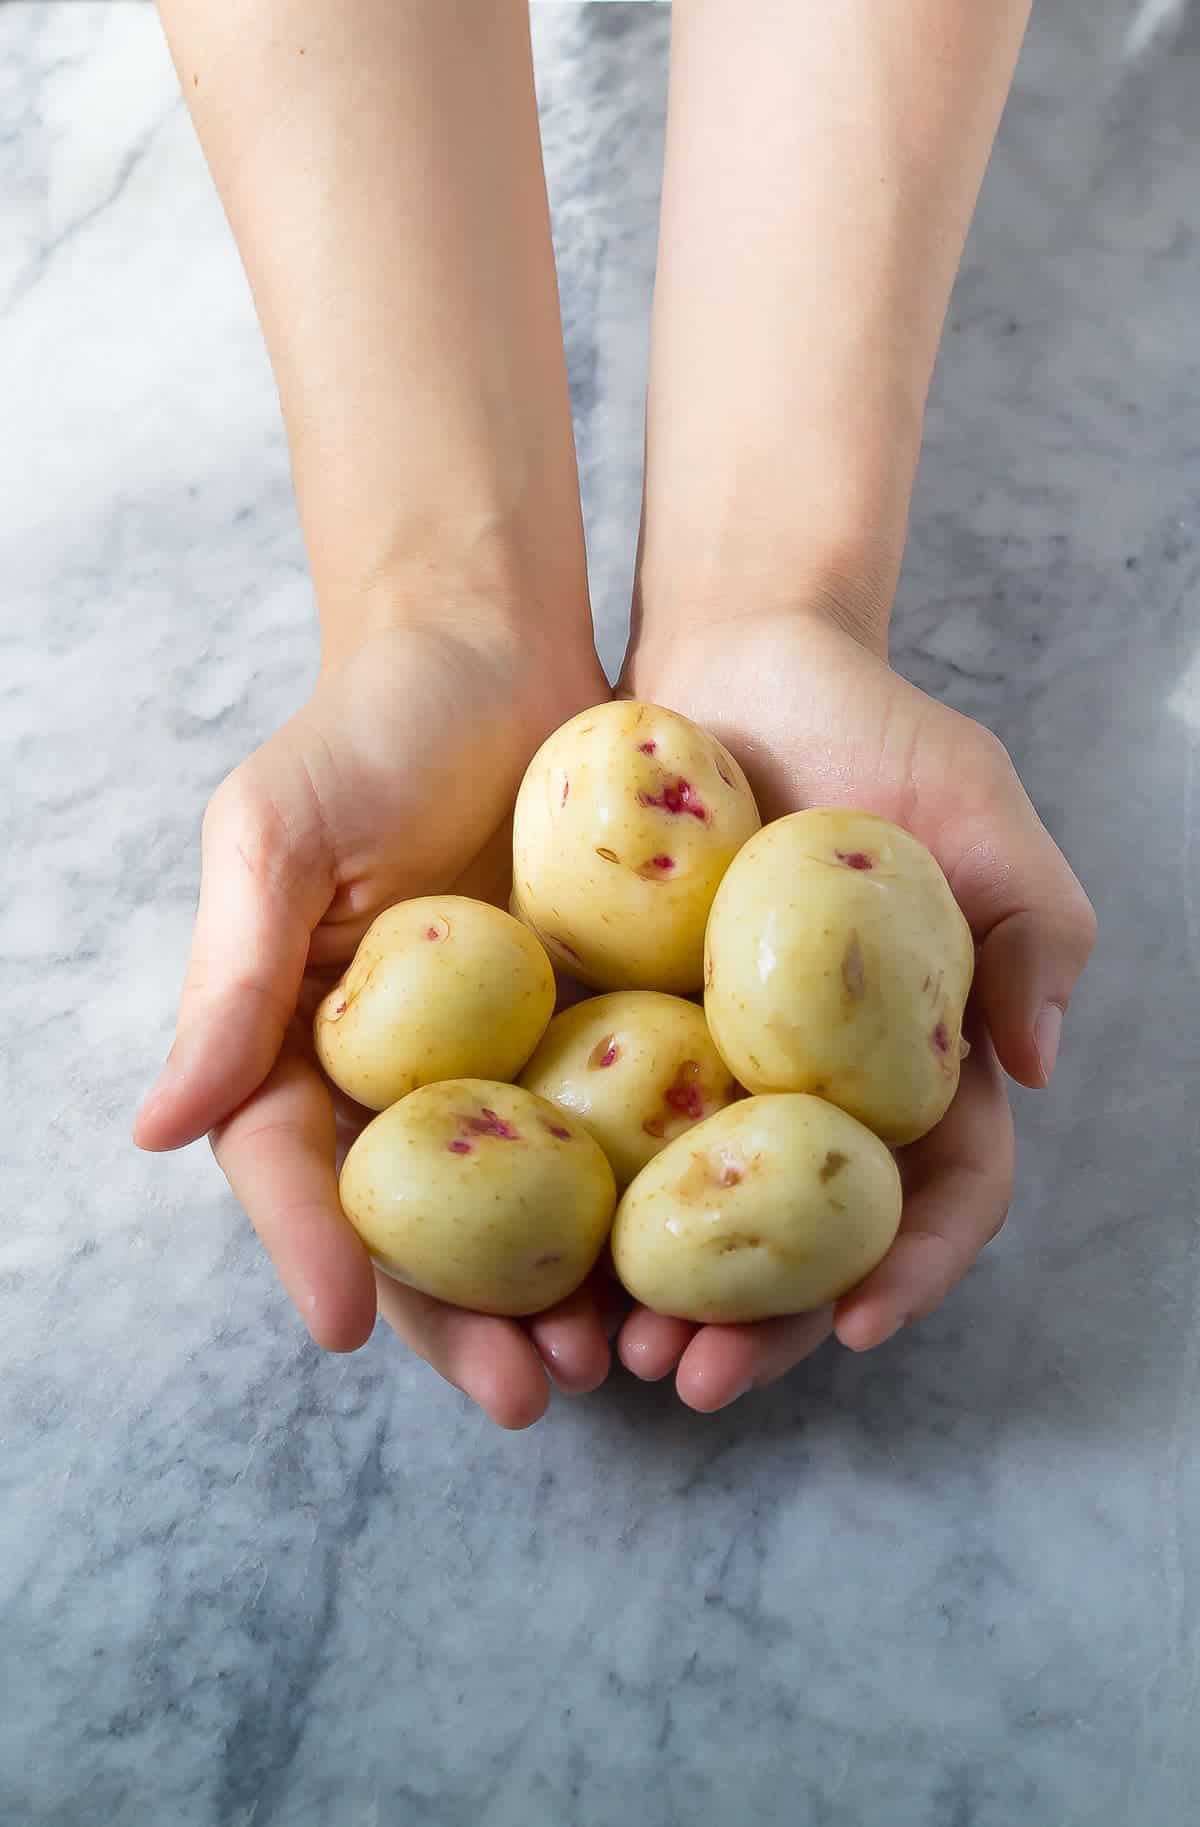 Hands full of white potatoes